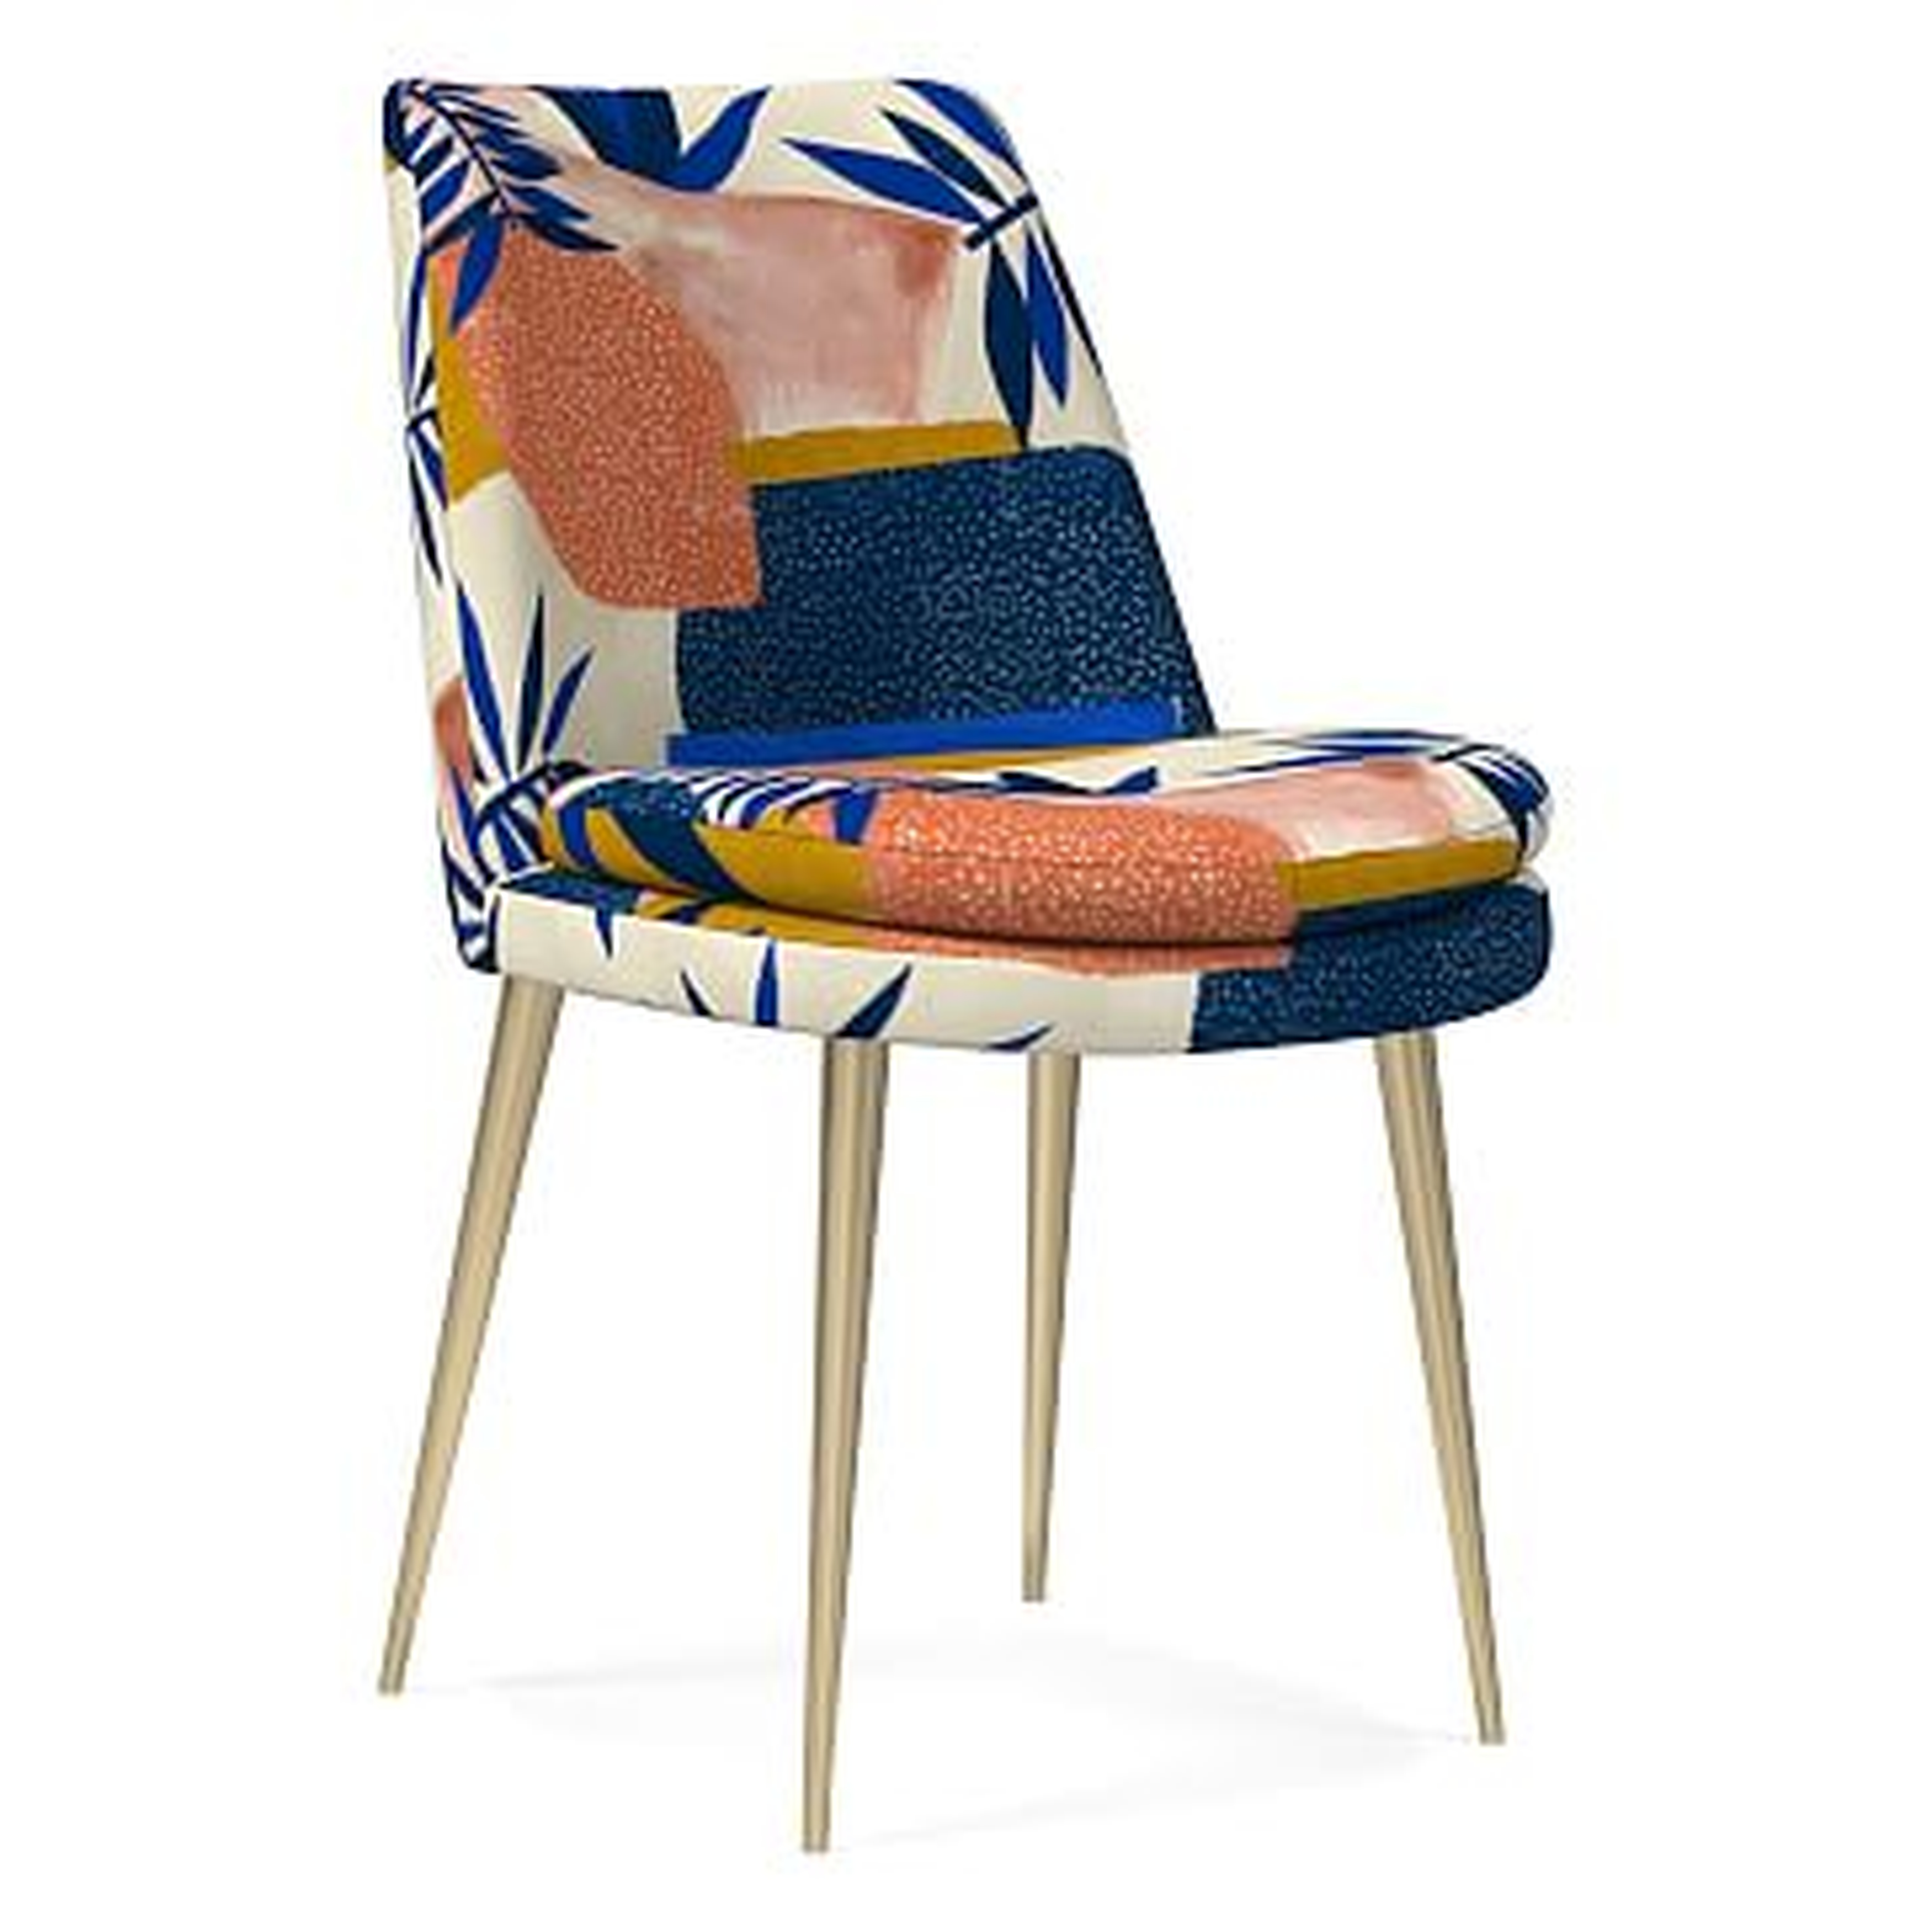 Finley Low Back Dining Chair, Botanic Collage Landscape, Blue Multi, Light Bronze - West Elm